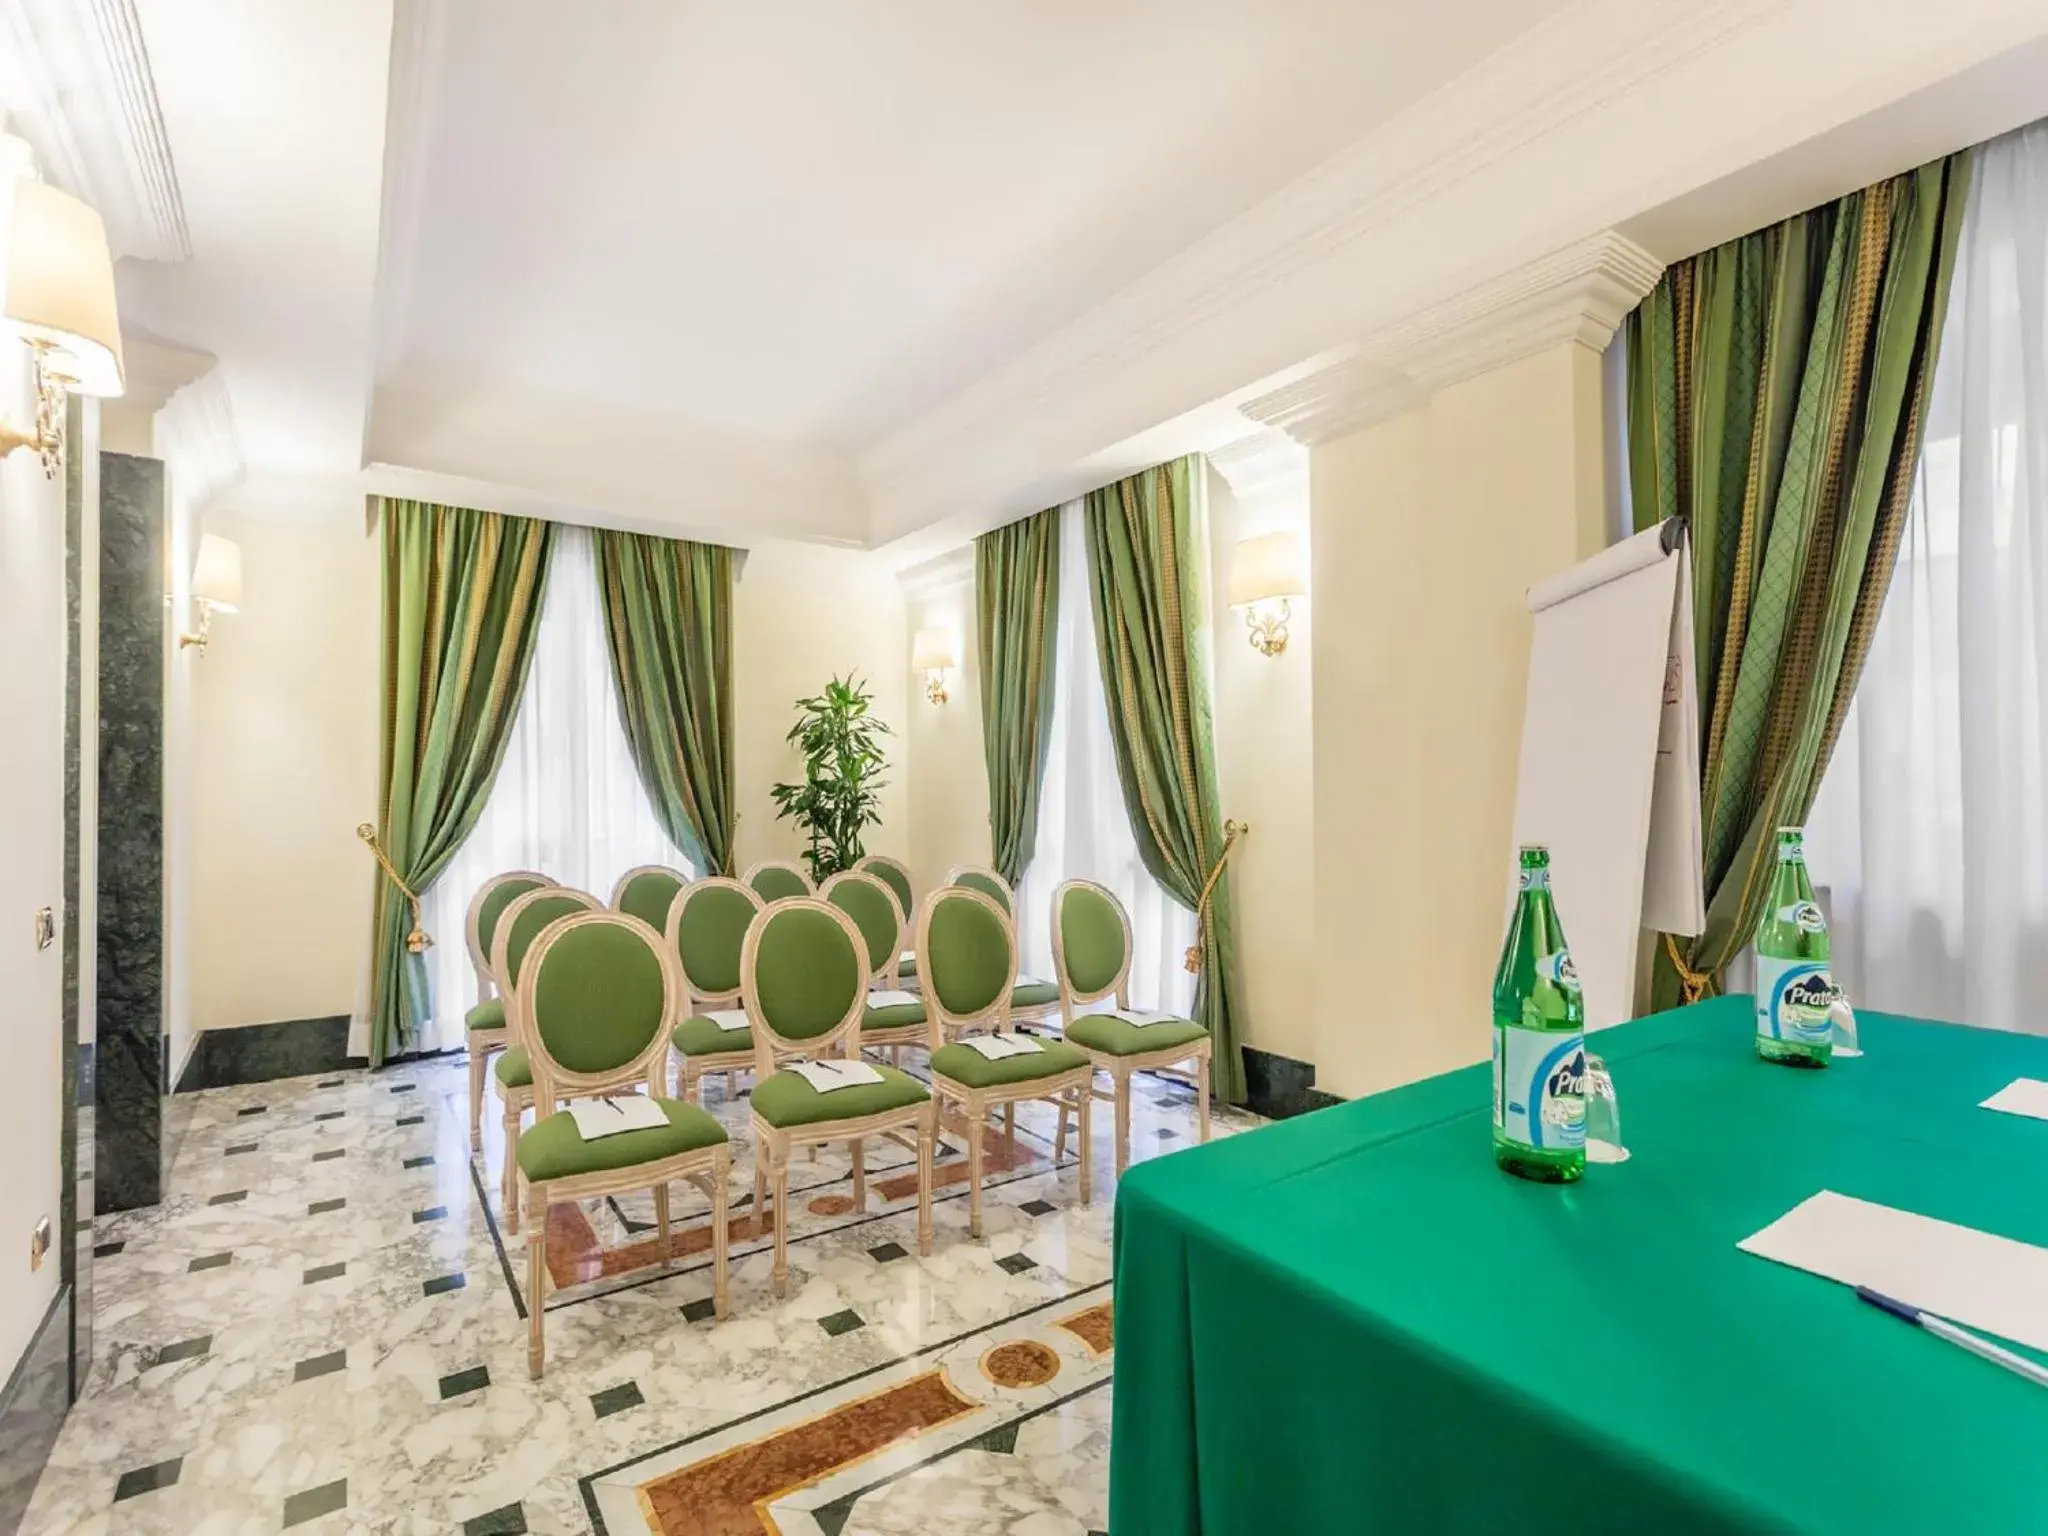 Meeting/conference room in Raeli Hotel Regio